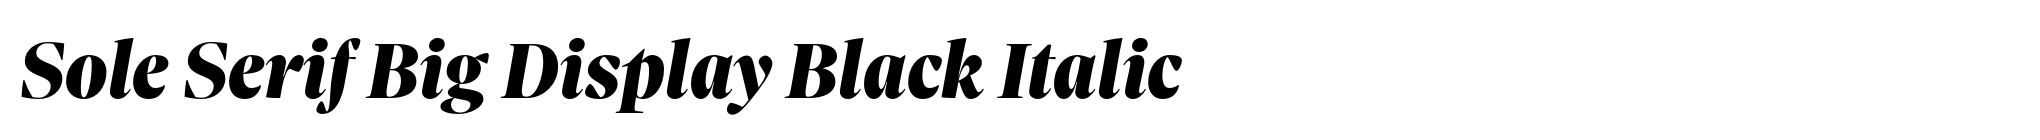 Sole Serif Big Display Black Italic image